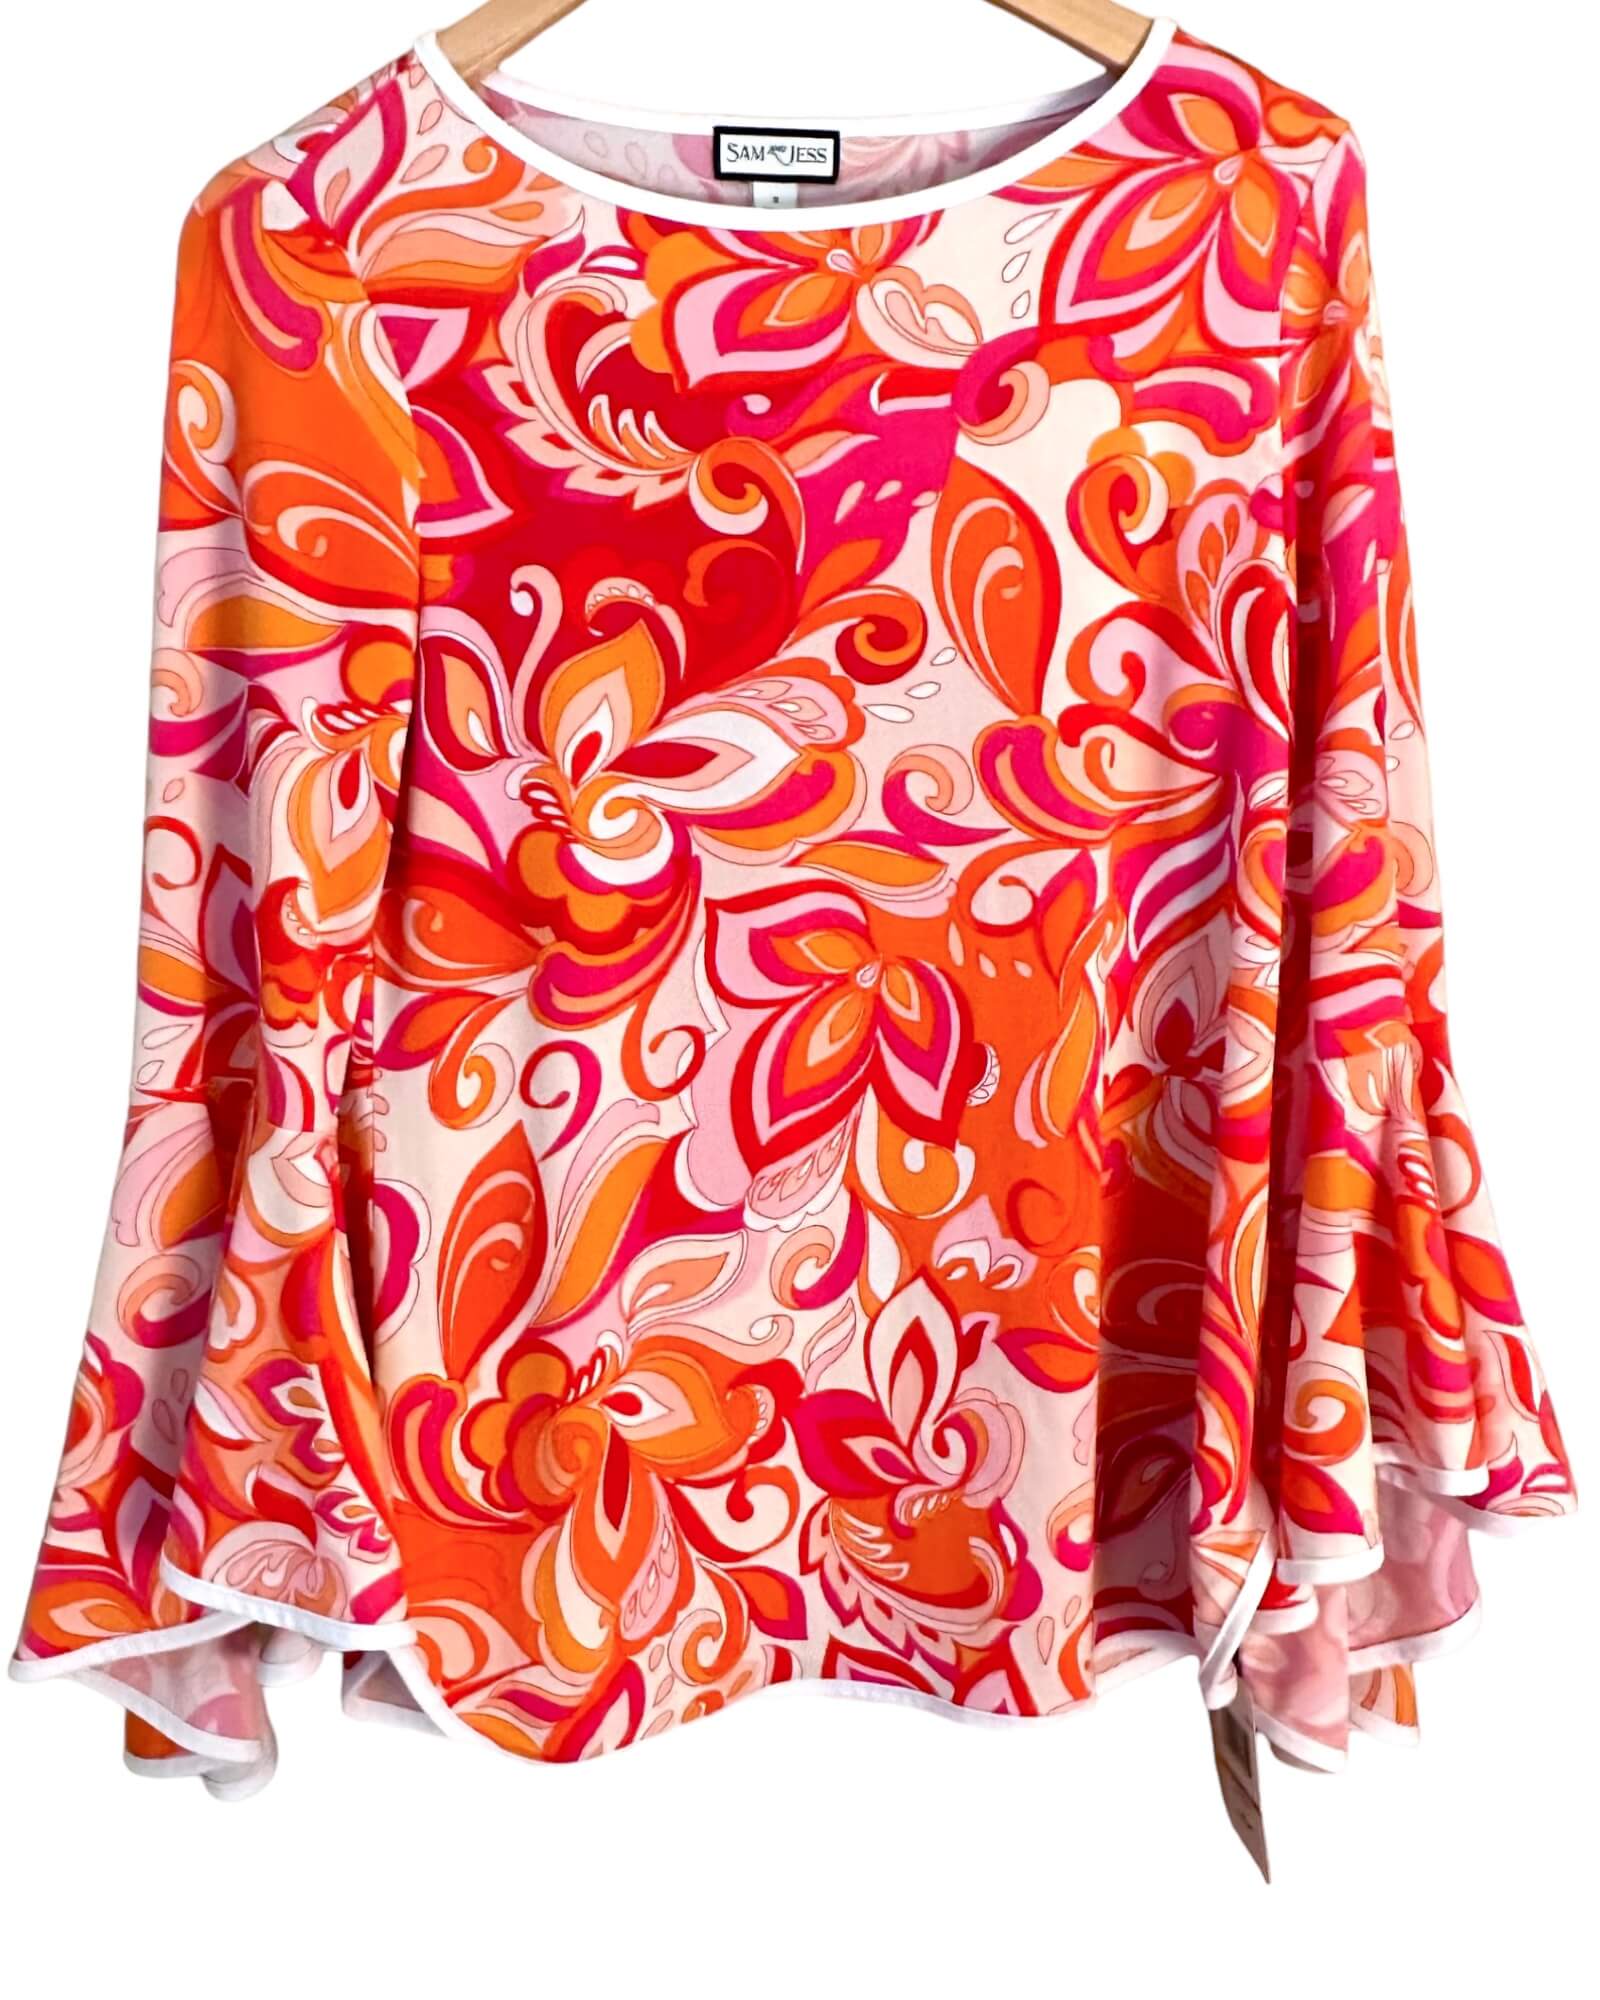 Bright Spring SAM & JESS floral print bell sleeve blouse